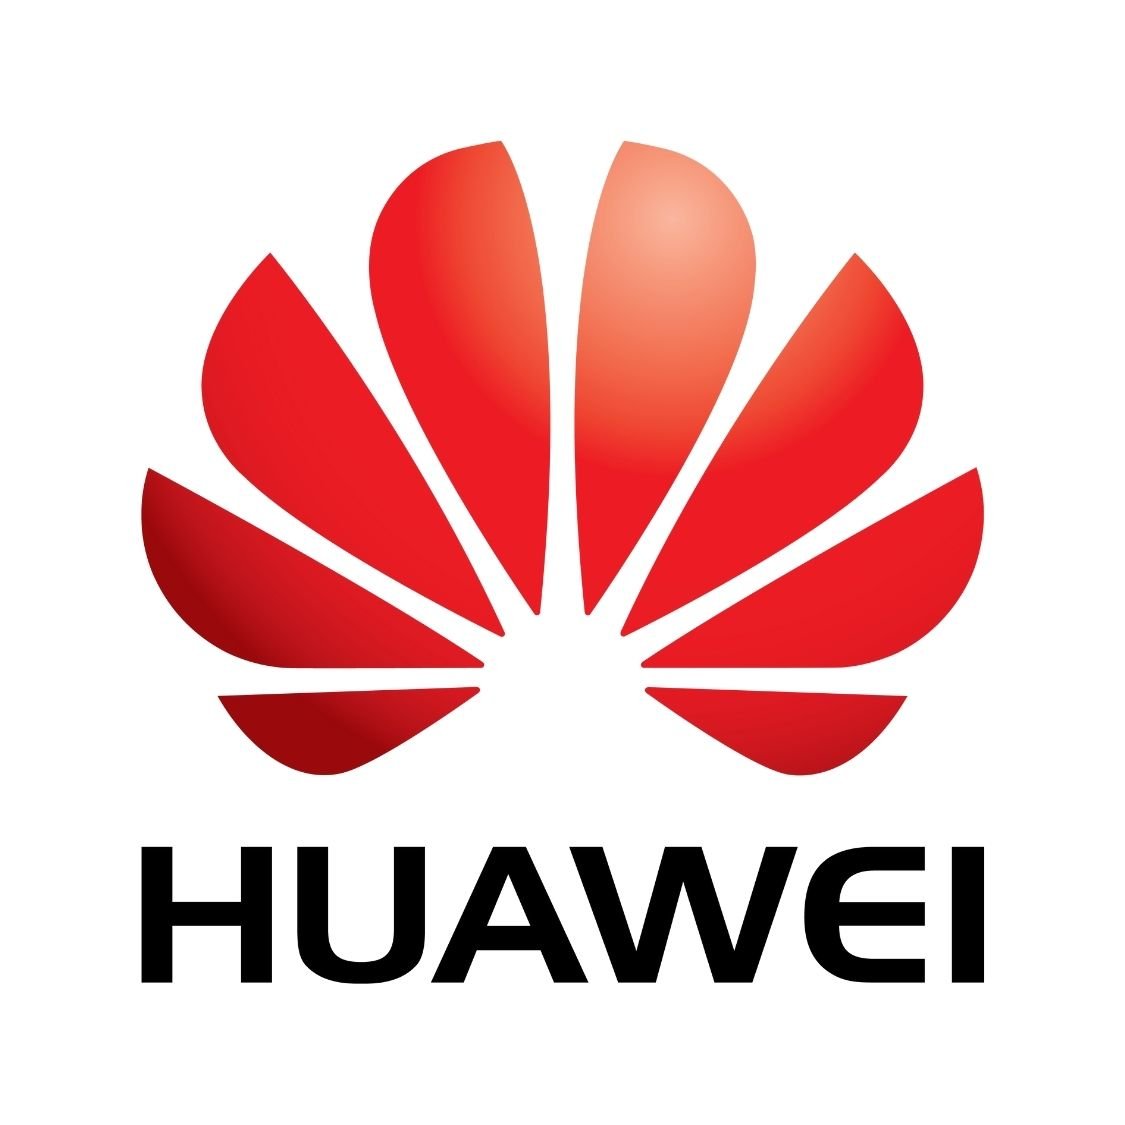 Huawei logo.jpg